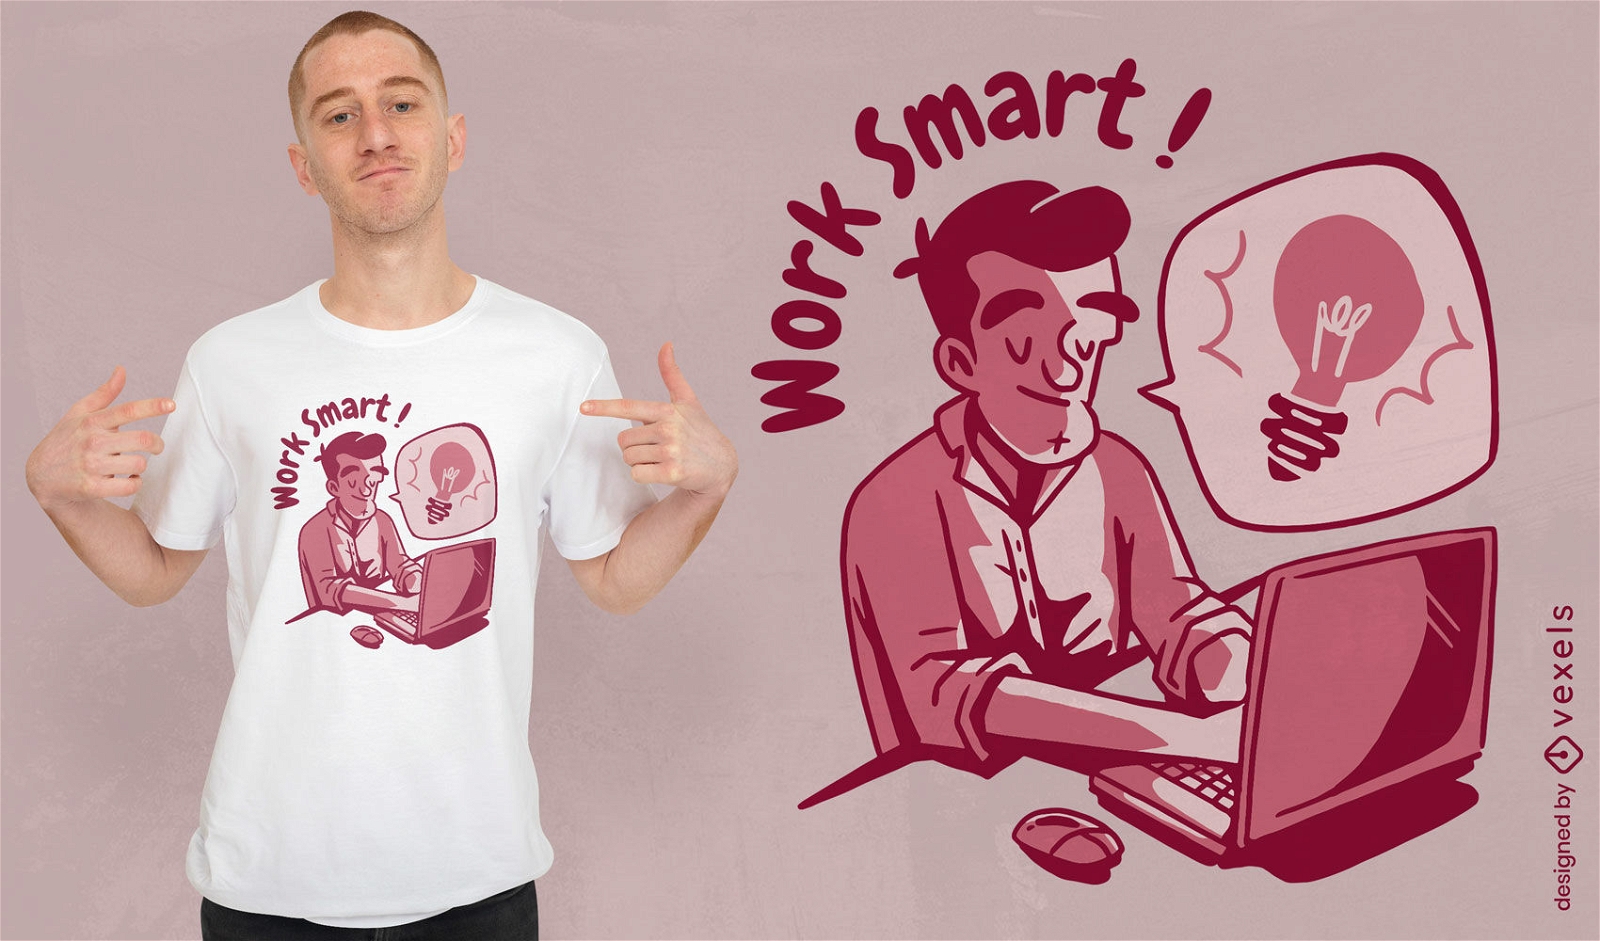 Work smart monochromatic t-shirt design